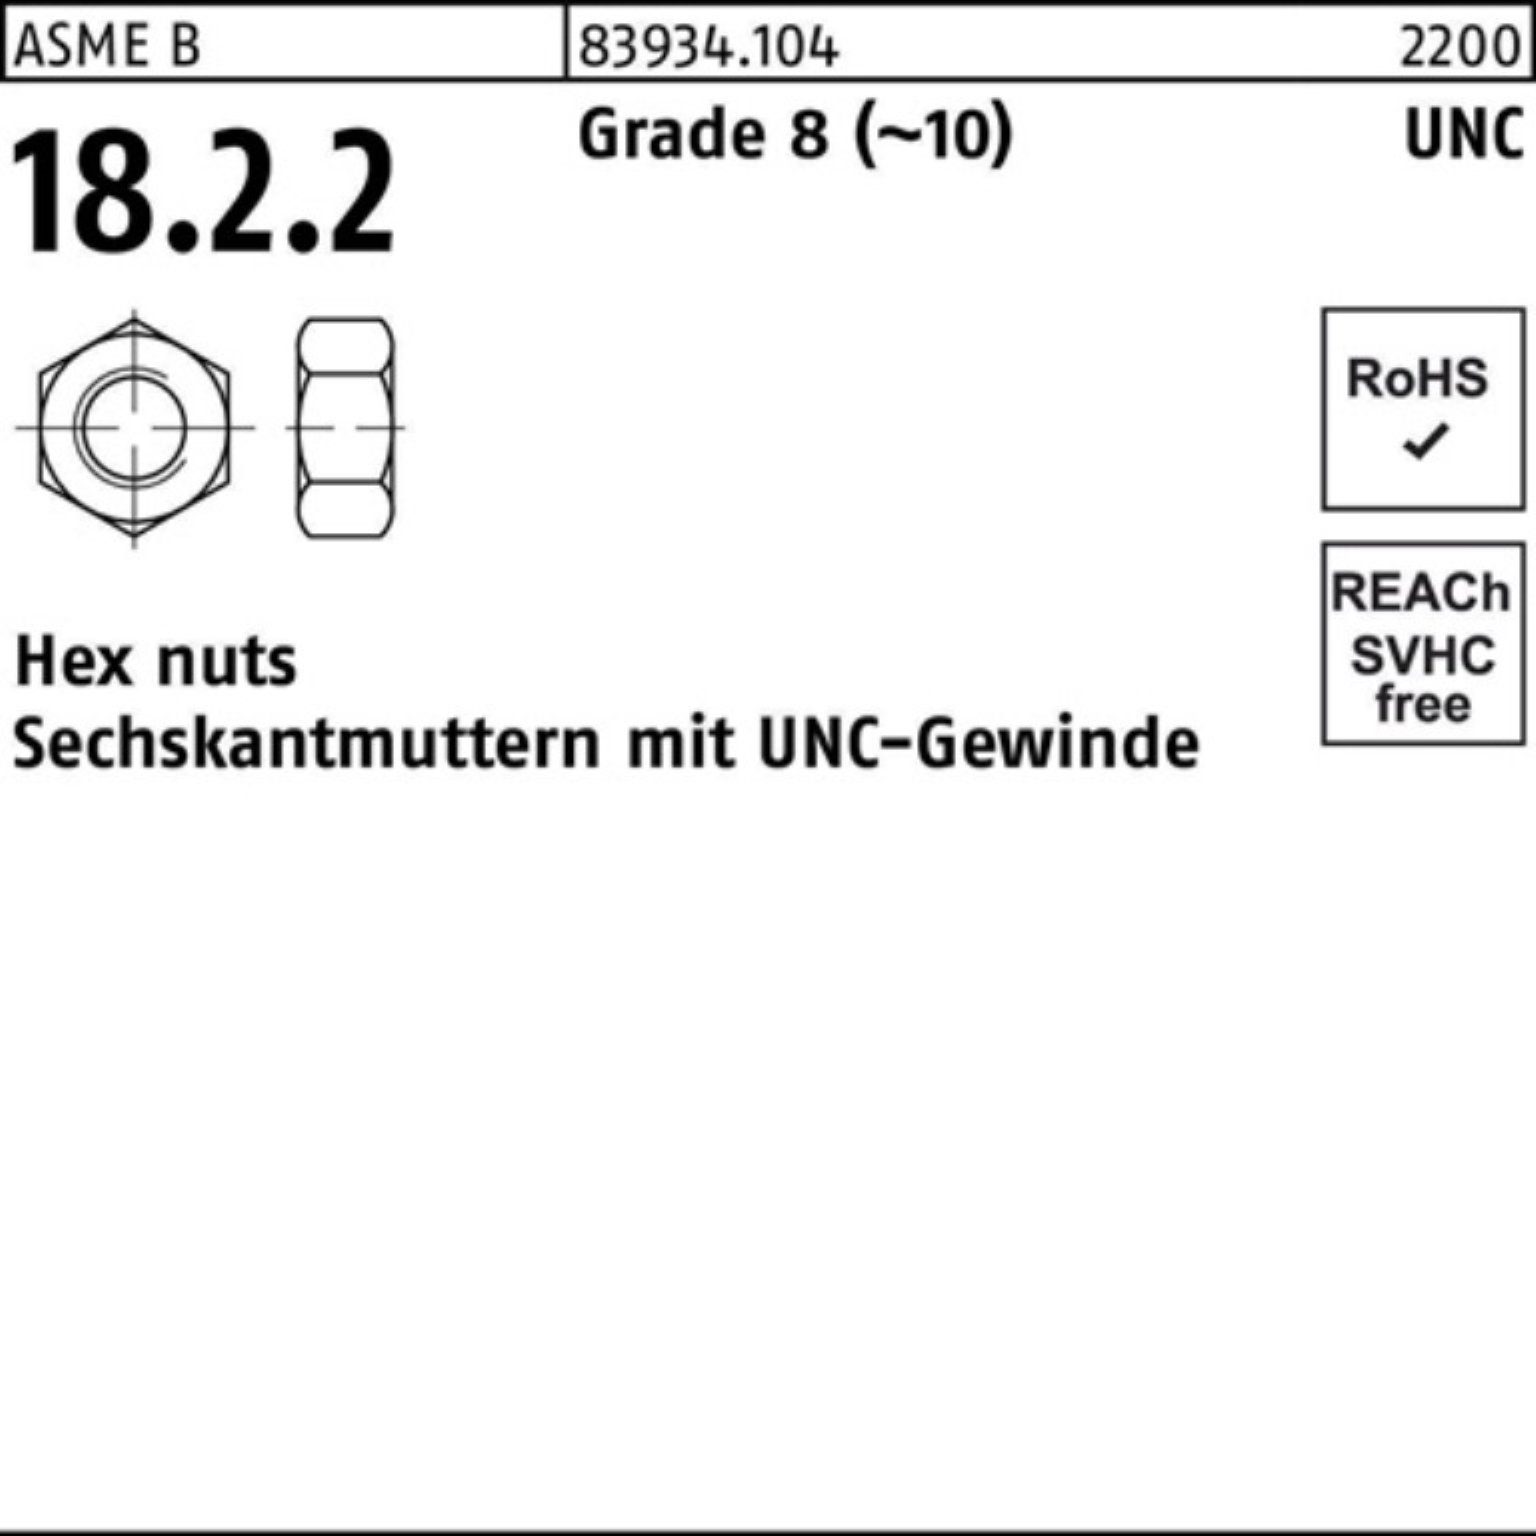 (10) S Sechskantmutter Pack R Reyher 100er 8 50 83934 UNC-Gewinde Grade Muttern 9/16